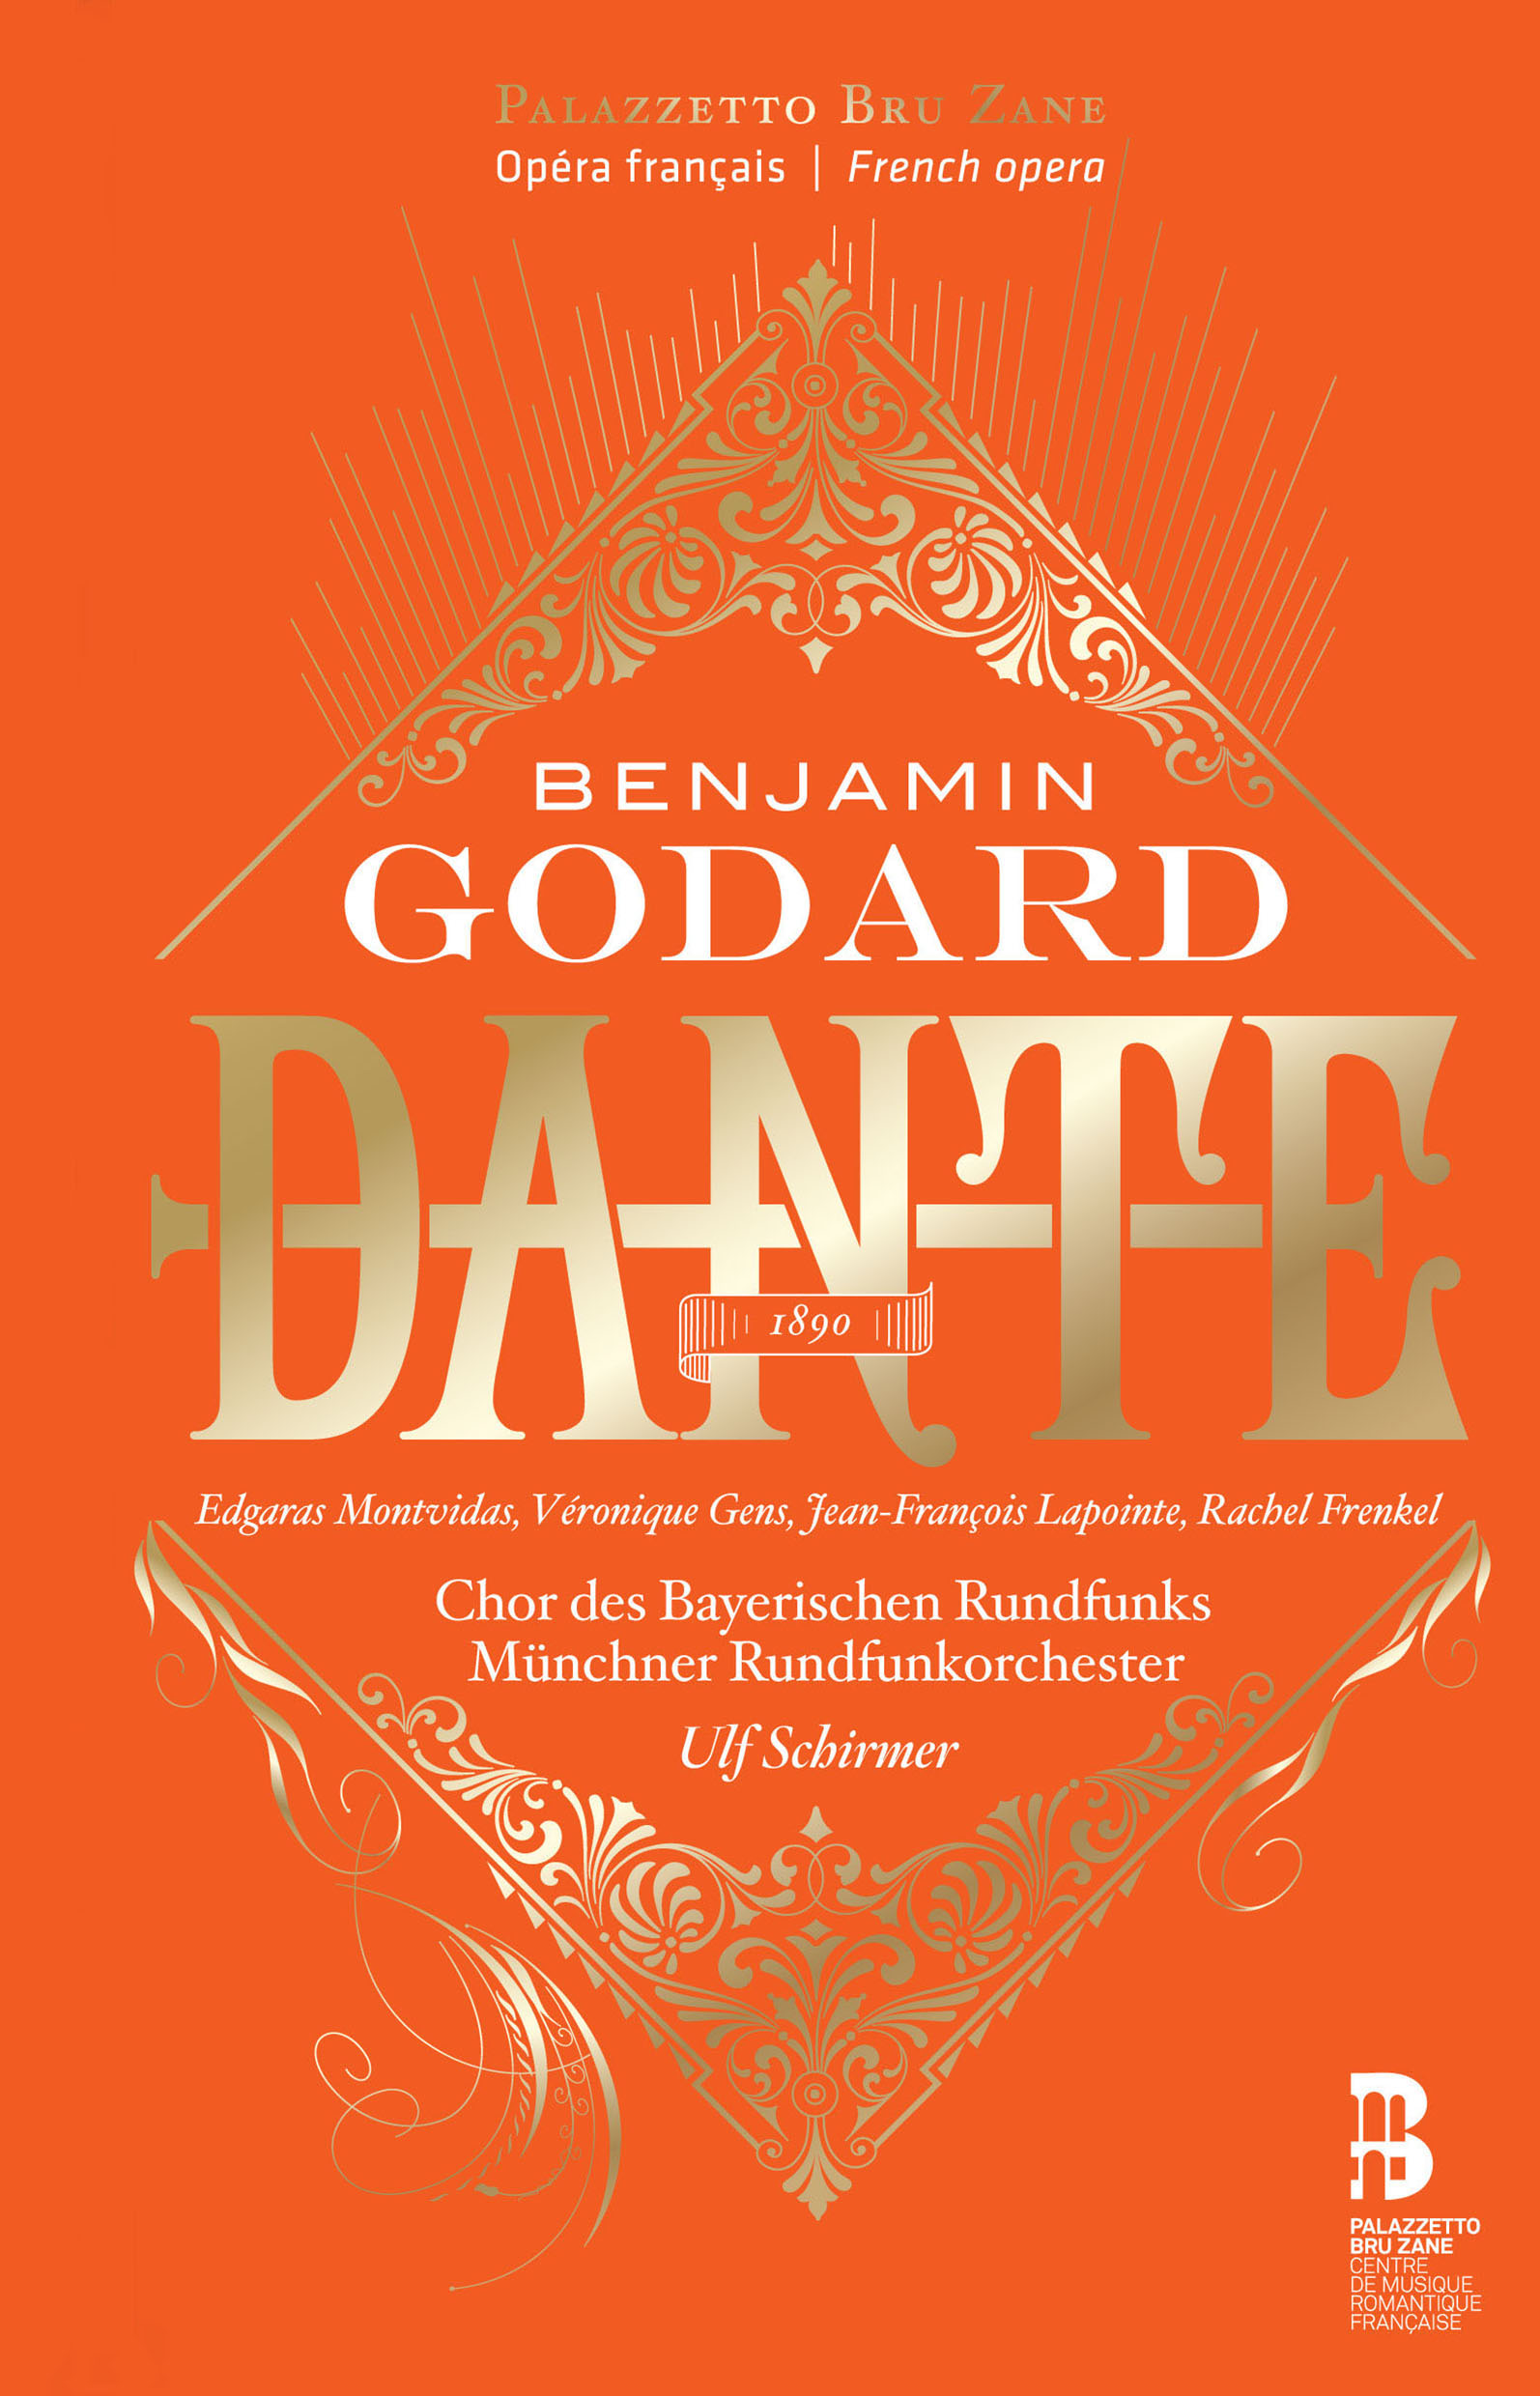 Godard: Dante